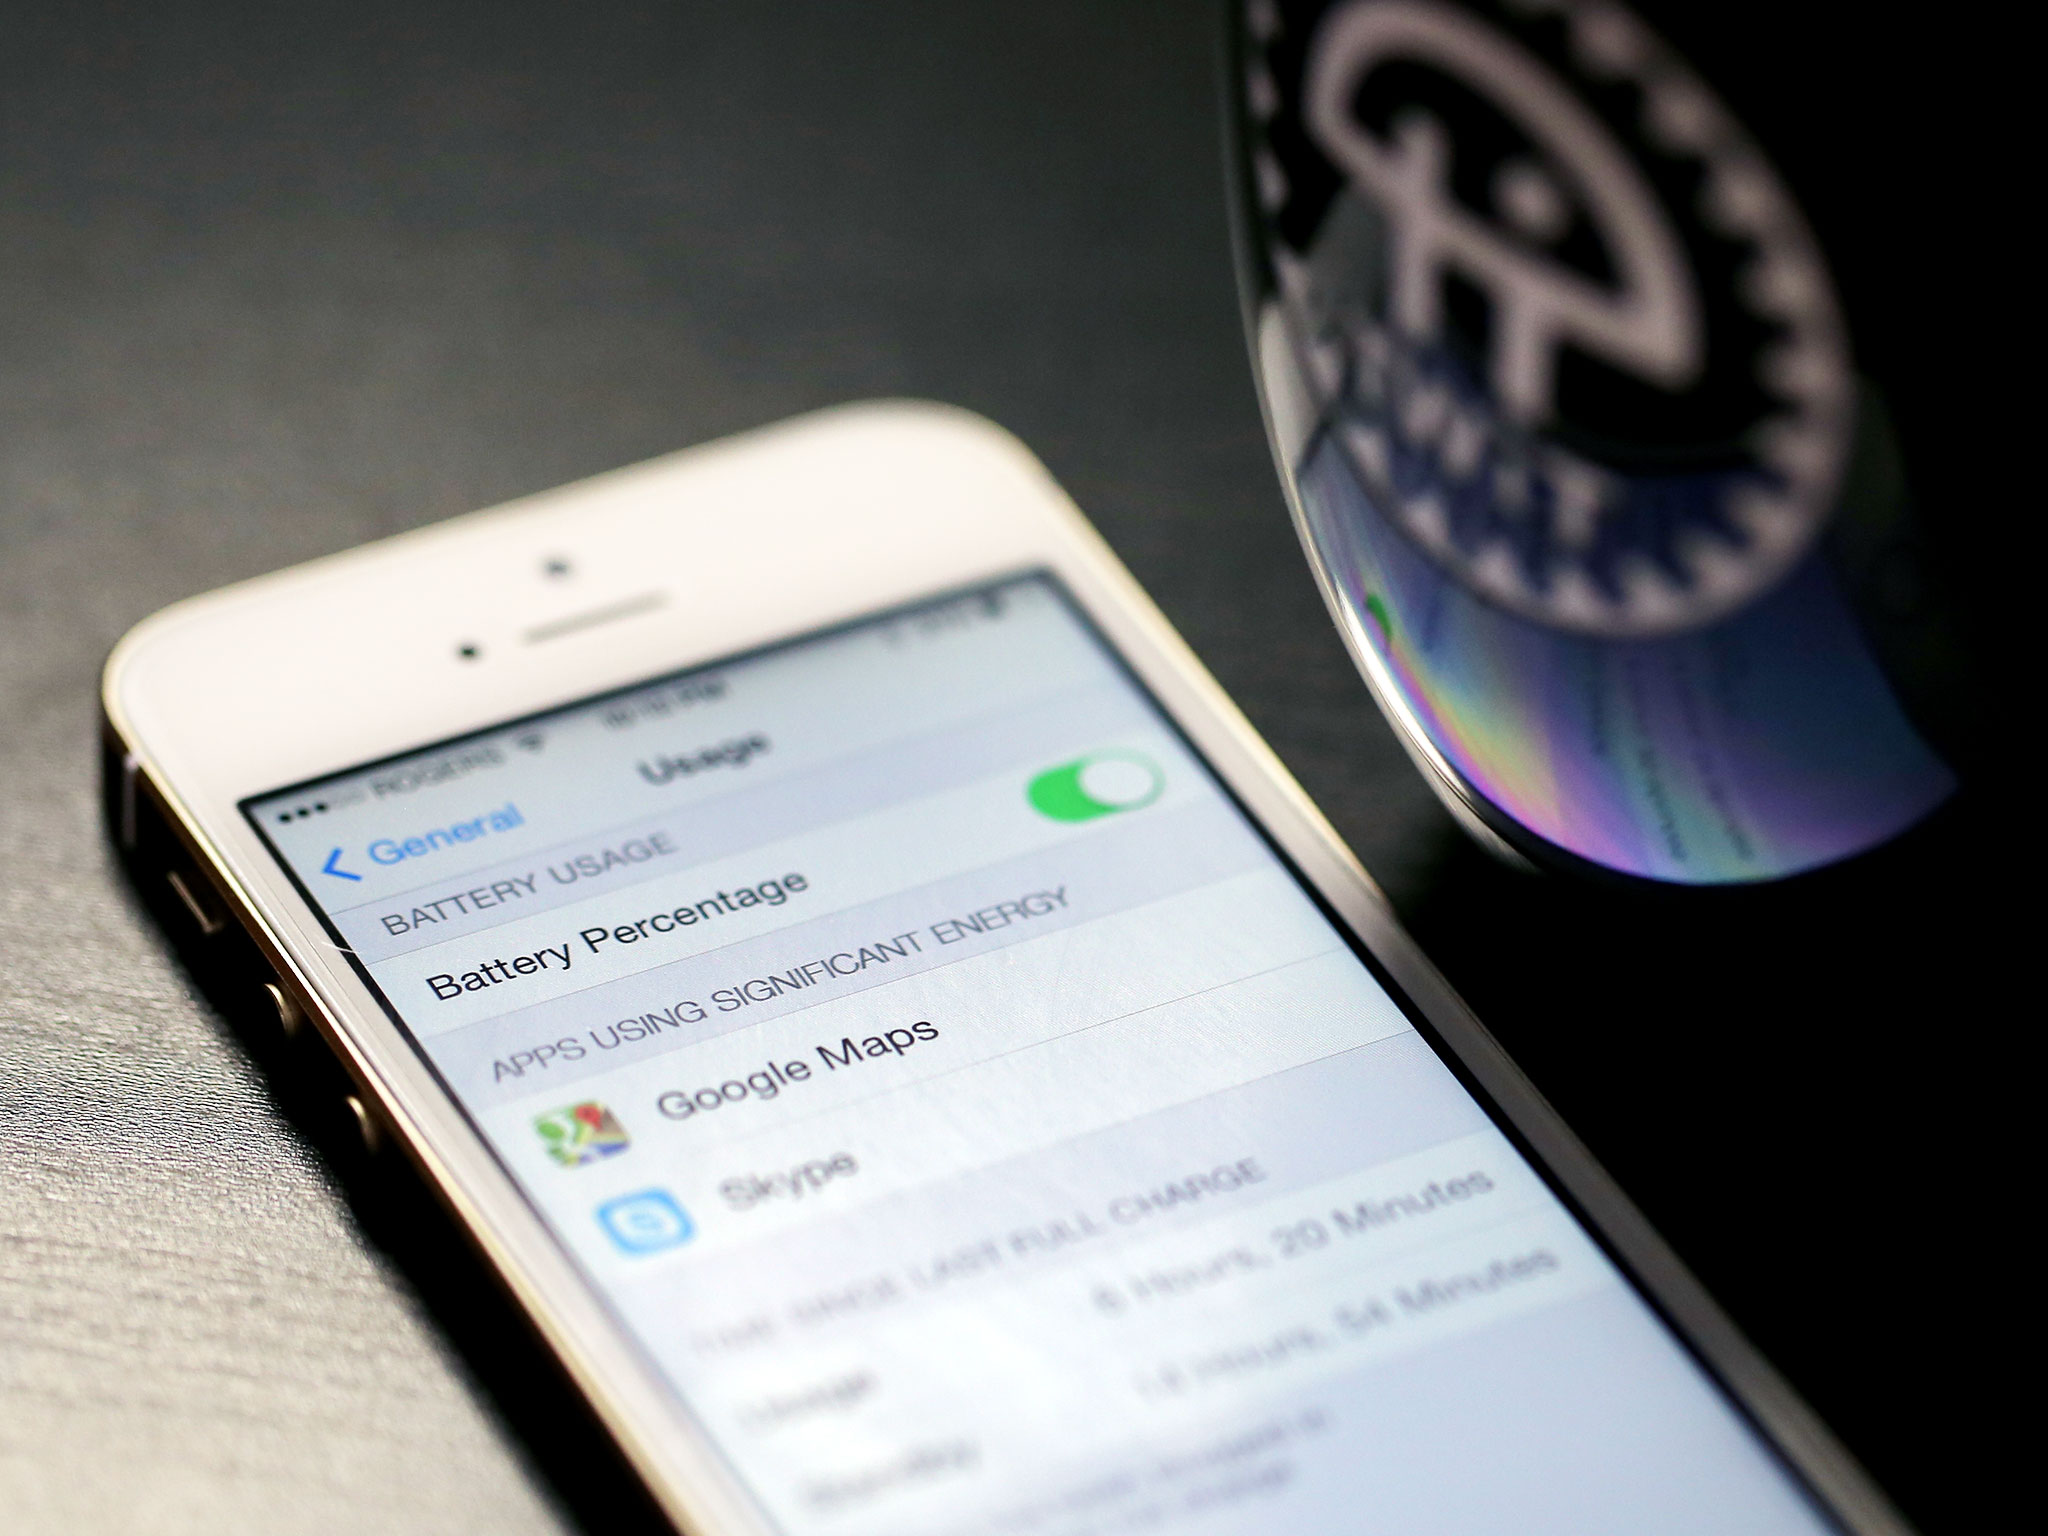 iOS 8 wants: Battery shaming